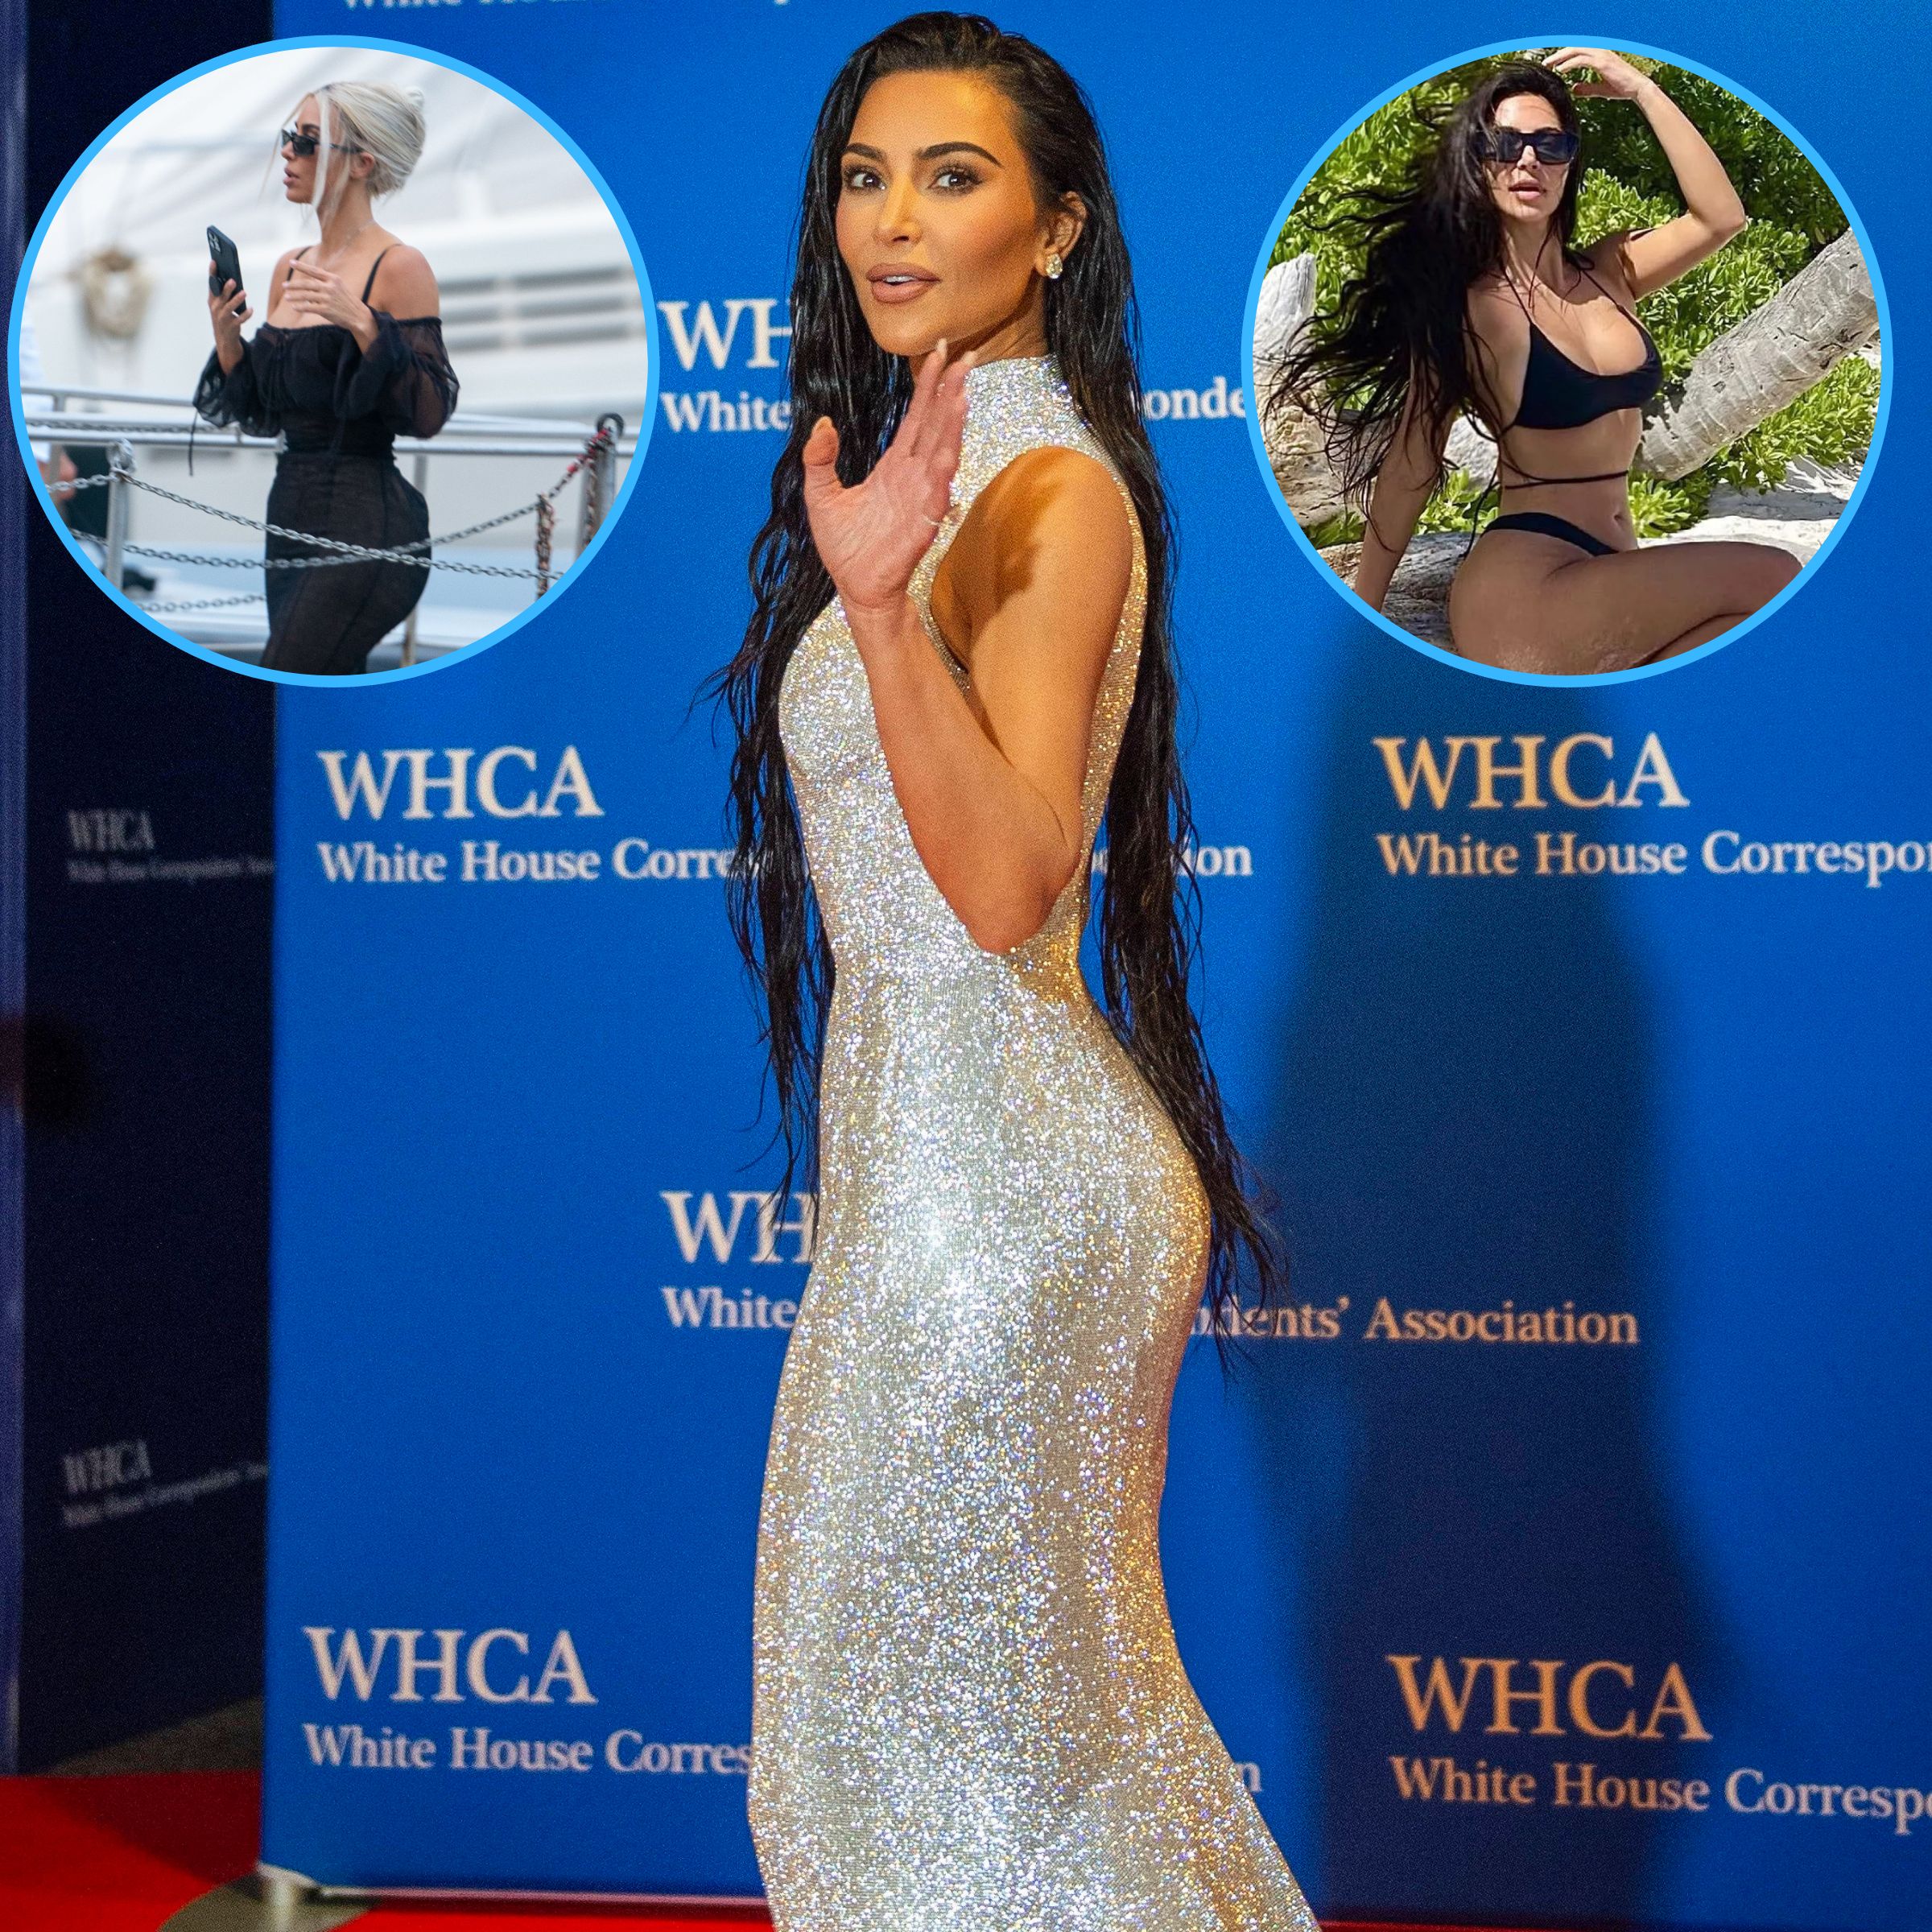 Kim Kardashian Butt Photos: Best Pics Showing Off Her Curves